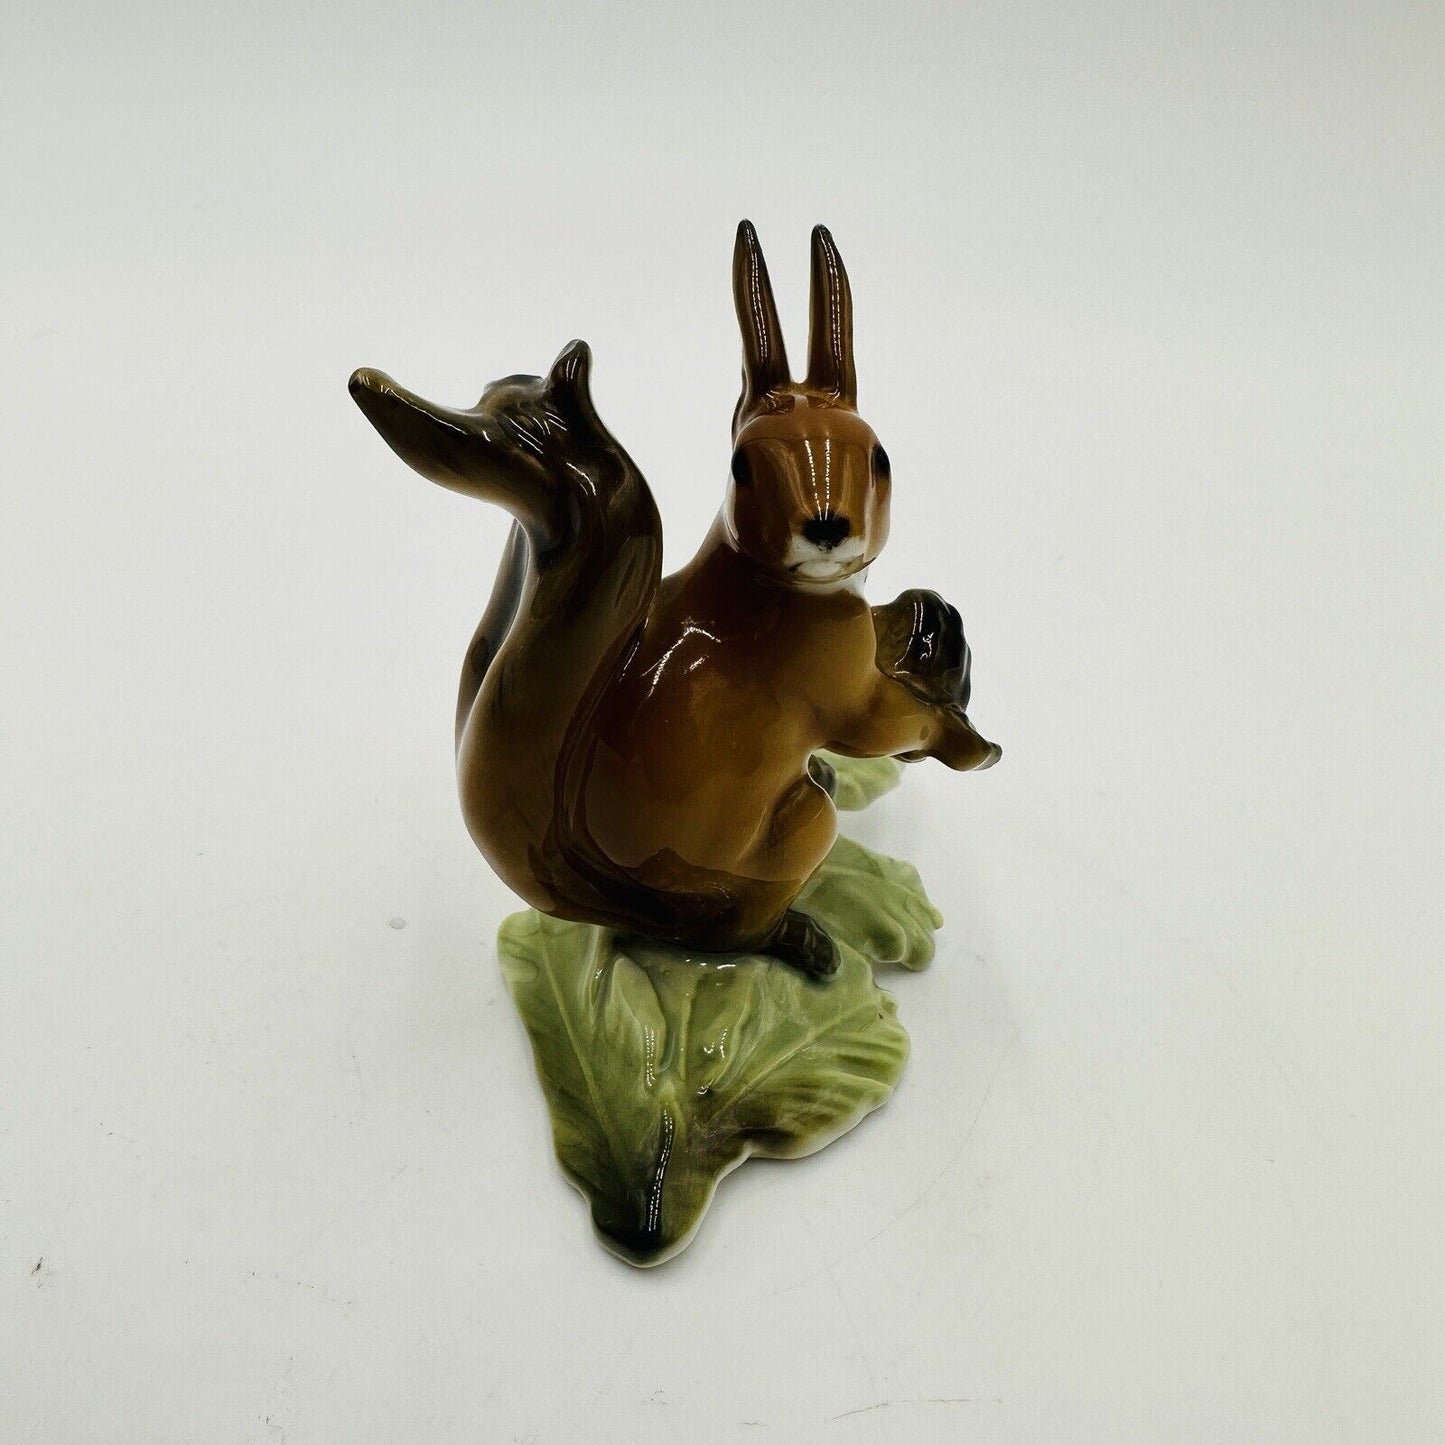 Hutschenreuther Squirrel Porcelain Figurine Hans Achtziger Germany Vintage Decor